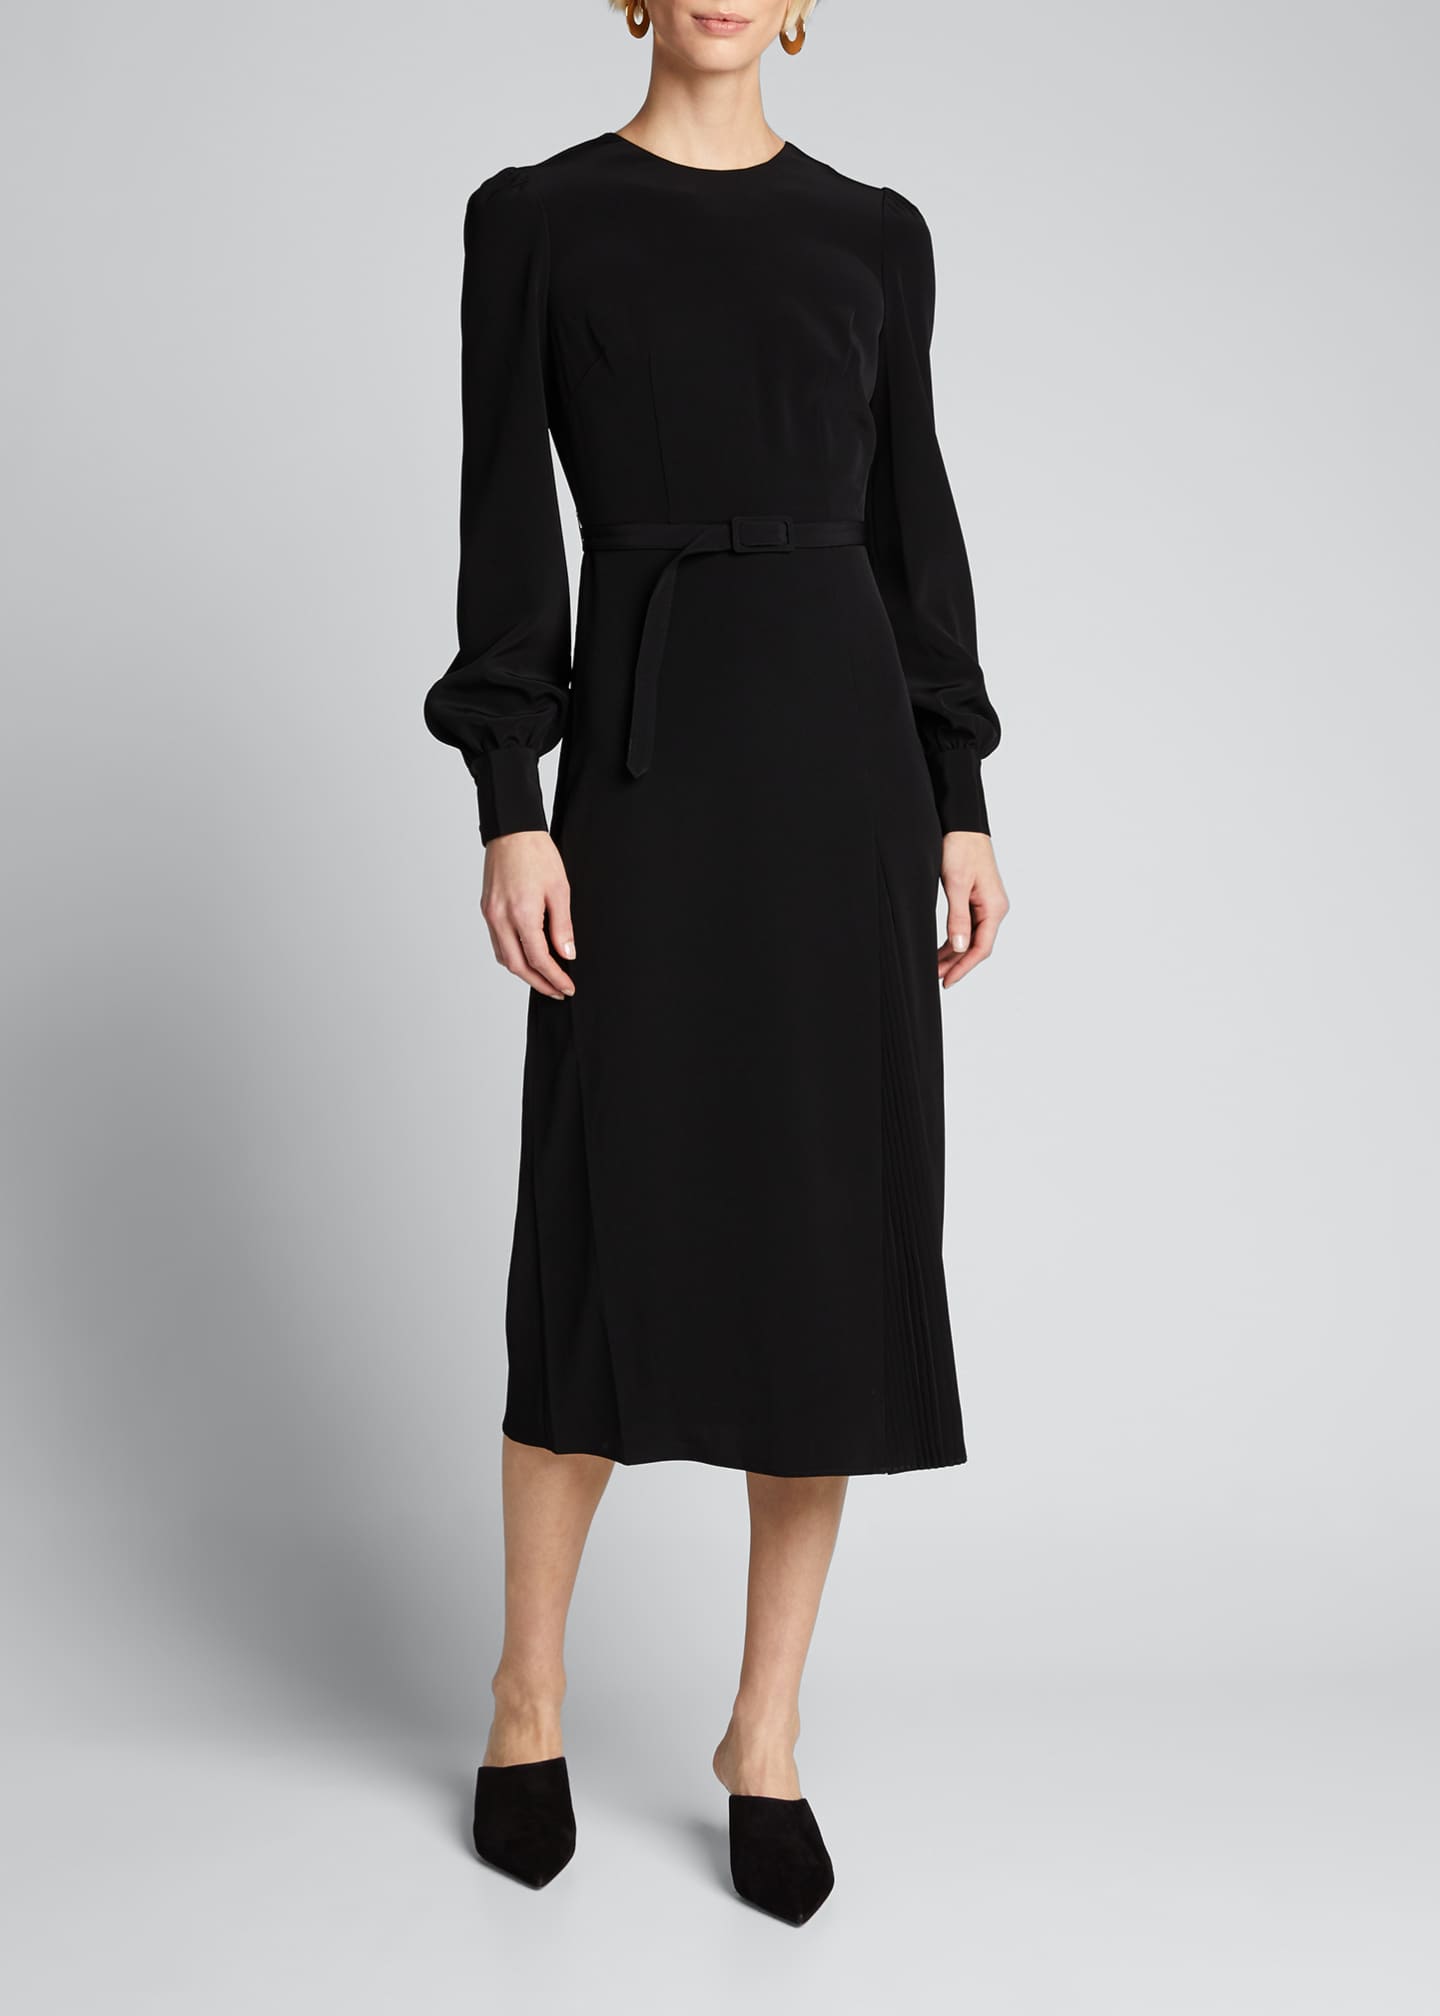 Co Tifa Stretch Crepe Long-Sleeve Belted Dress - Bergdorf Goodman